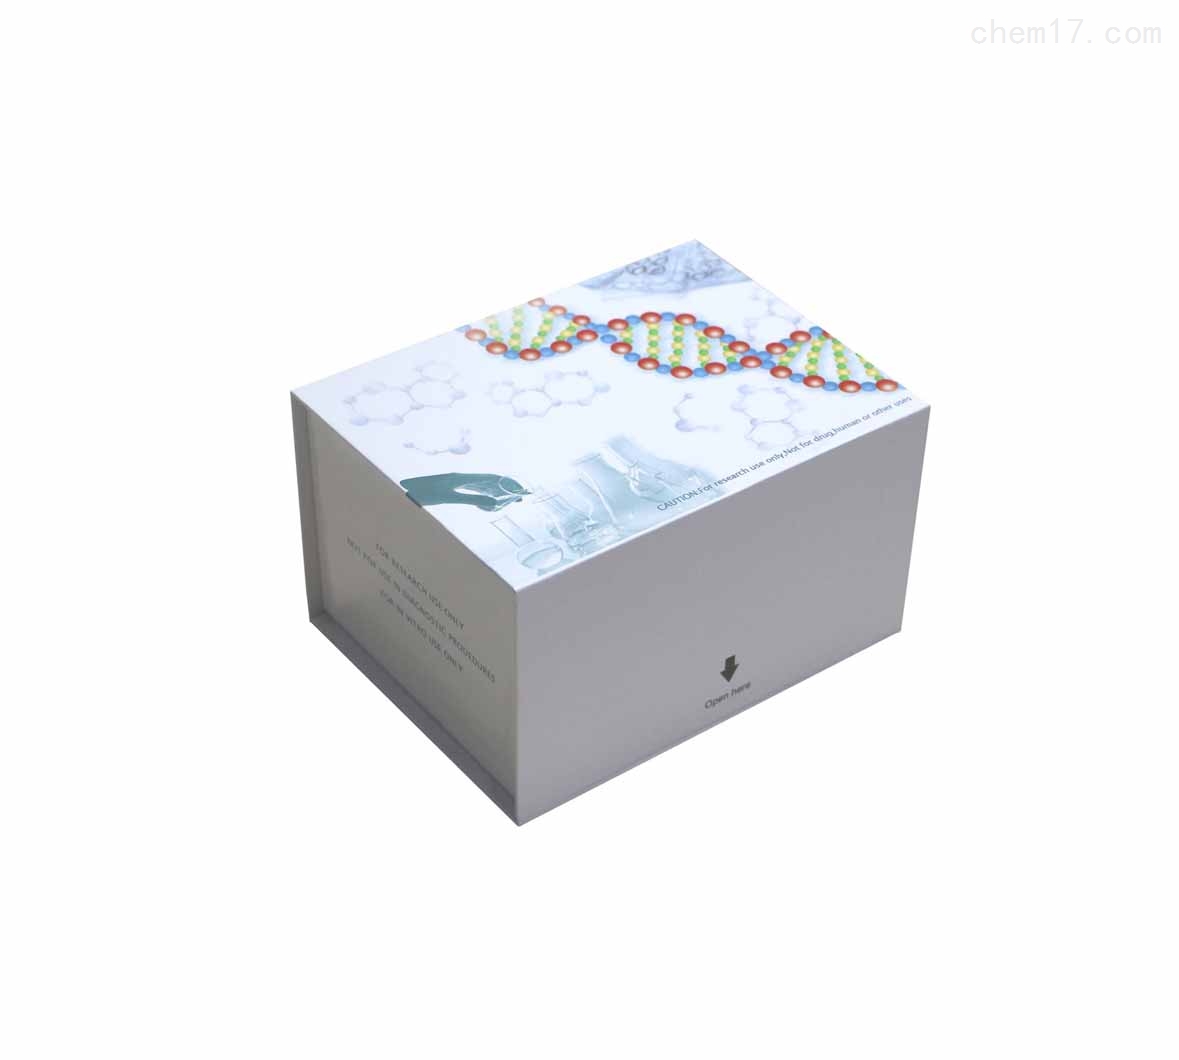 人泛素分解酶(DUB)ELISA试剂盒检测灵敏